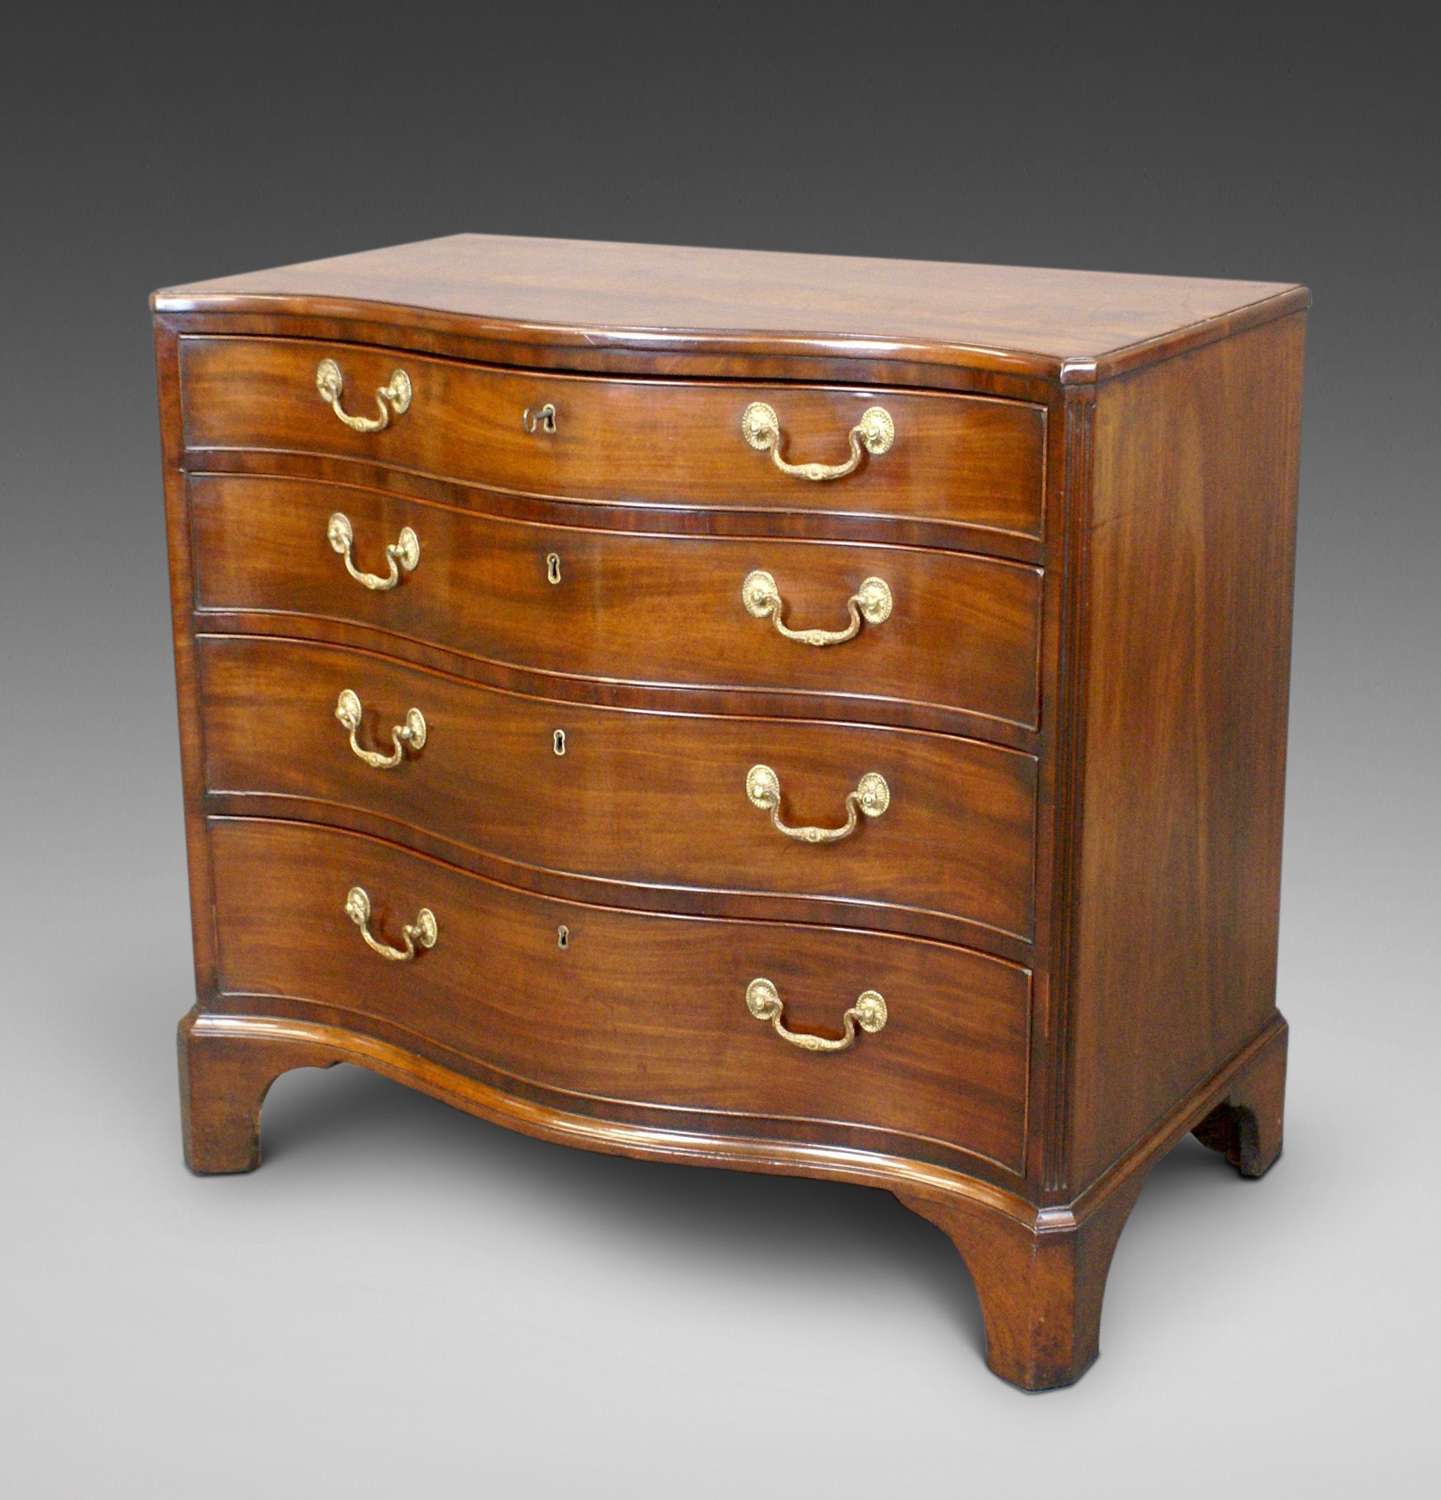 18th Century mahogany serpentine chest of drawers